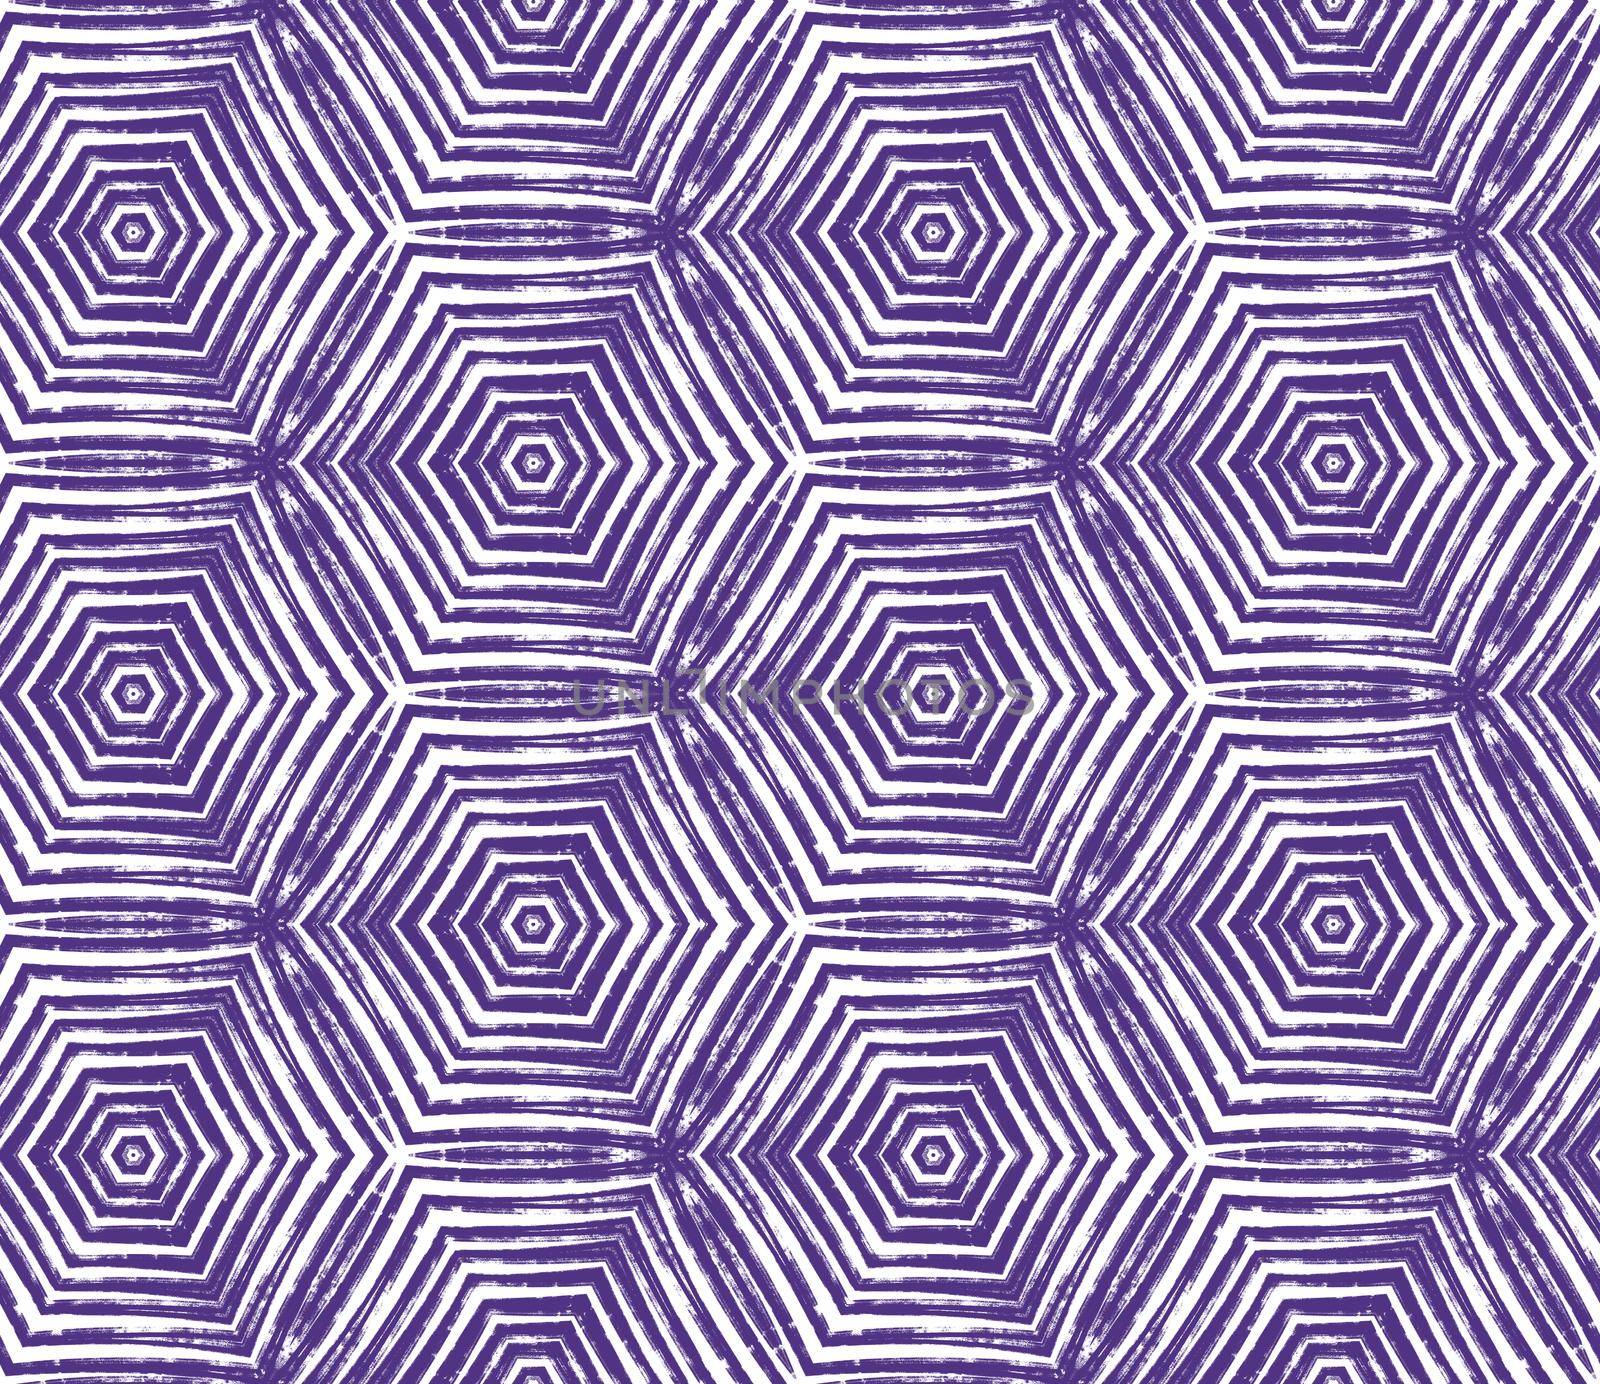 Arabesque hand drawn pattern. Purple symmetrical kaleidoscope background. Textile ready curious print, swimwear fabric, wallpaper, wrapping. Oriental arabesque hand drawn design.